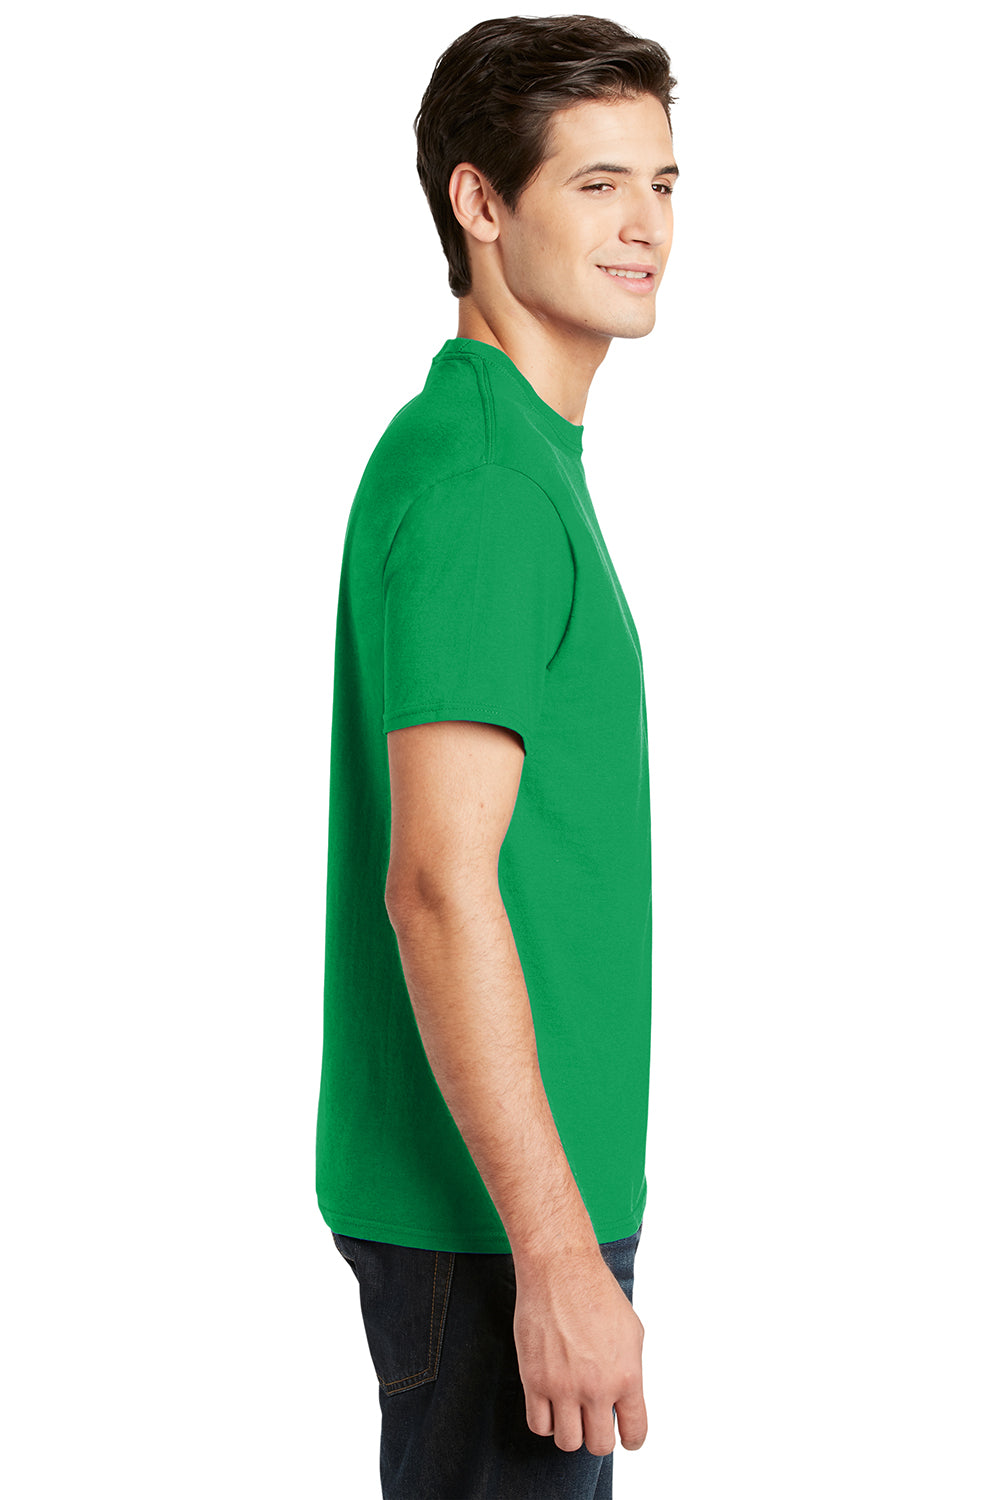 Hanes 5280 Mens ComfortSoft Short Sleeve Crewneck T-Shirt Kelly Green SIde